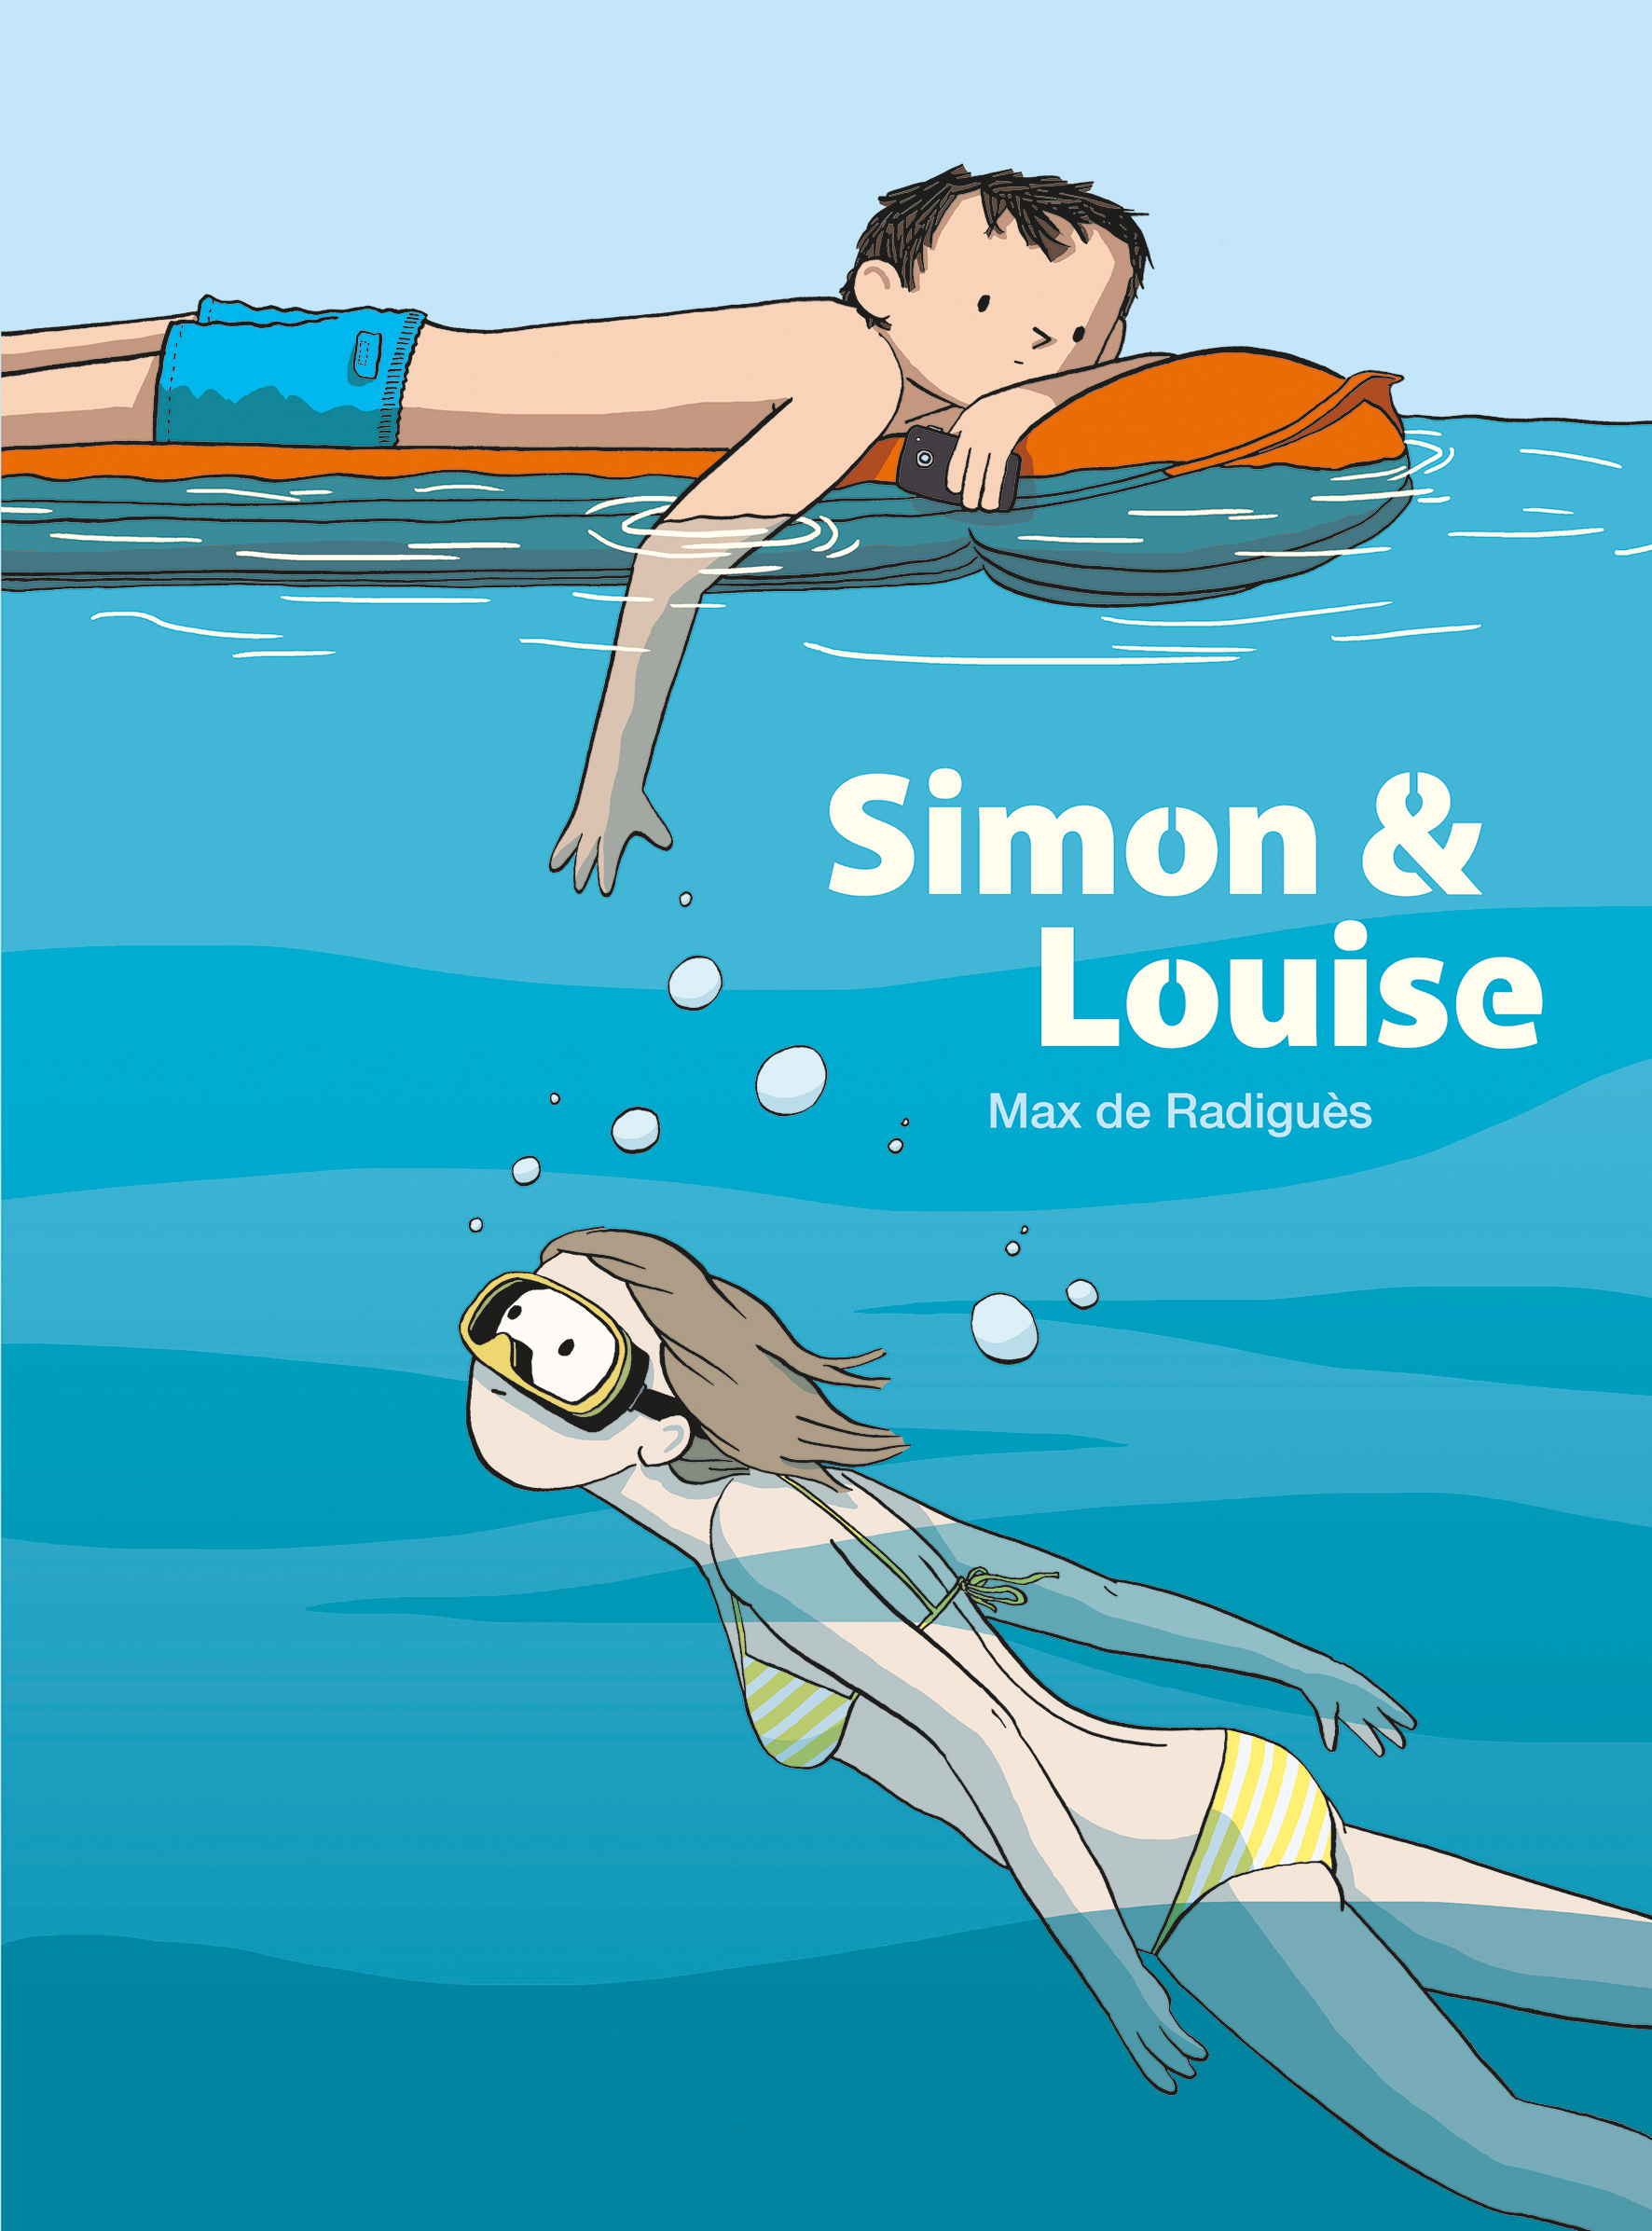 Simon & Louise (USA) img1